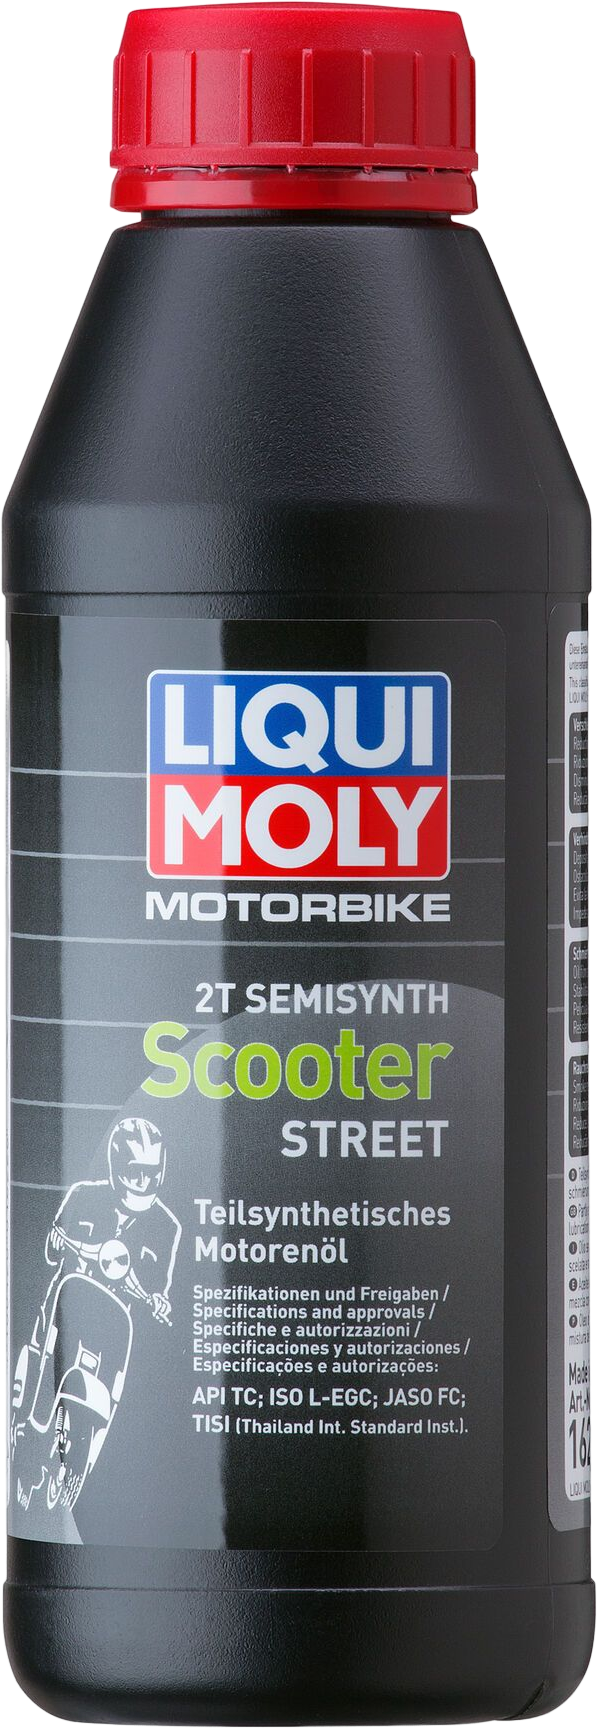 Liqui Moly Motorbike 2T Semisynth Scooter Street, 6 x 500 ml detail 2